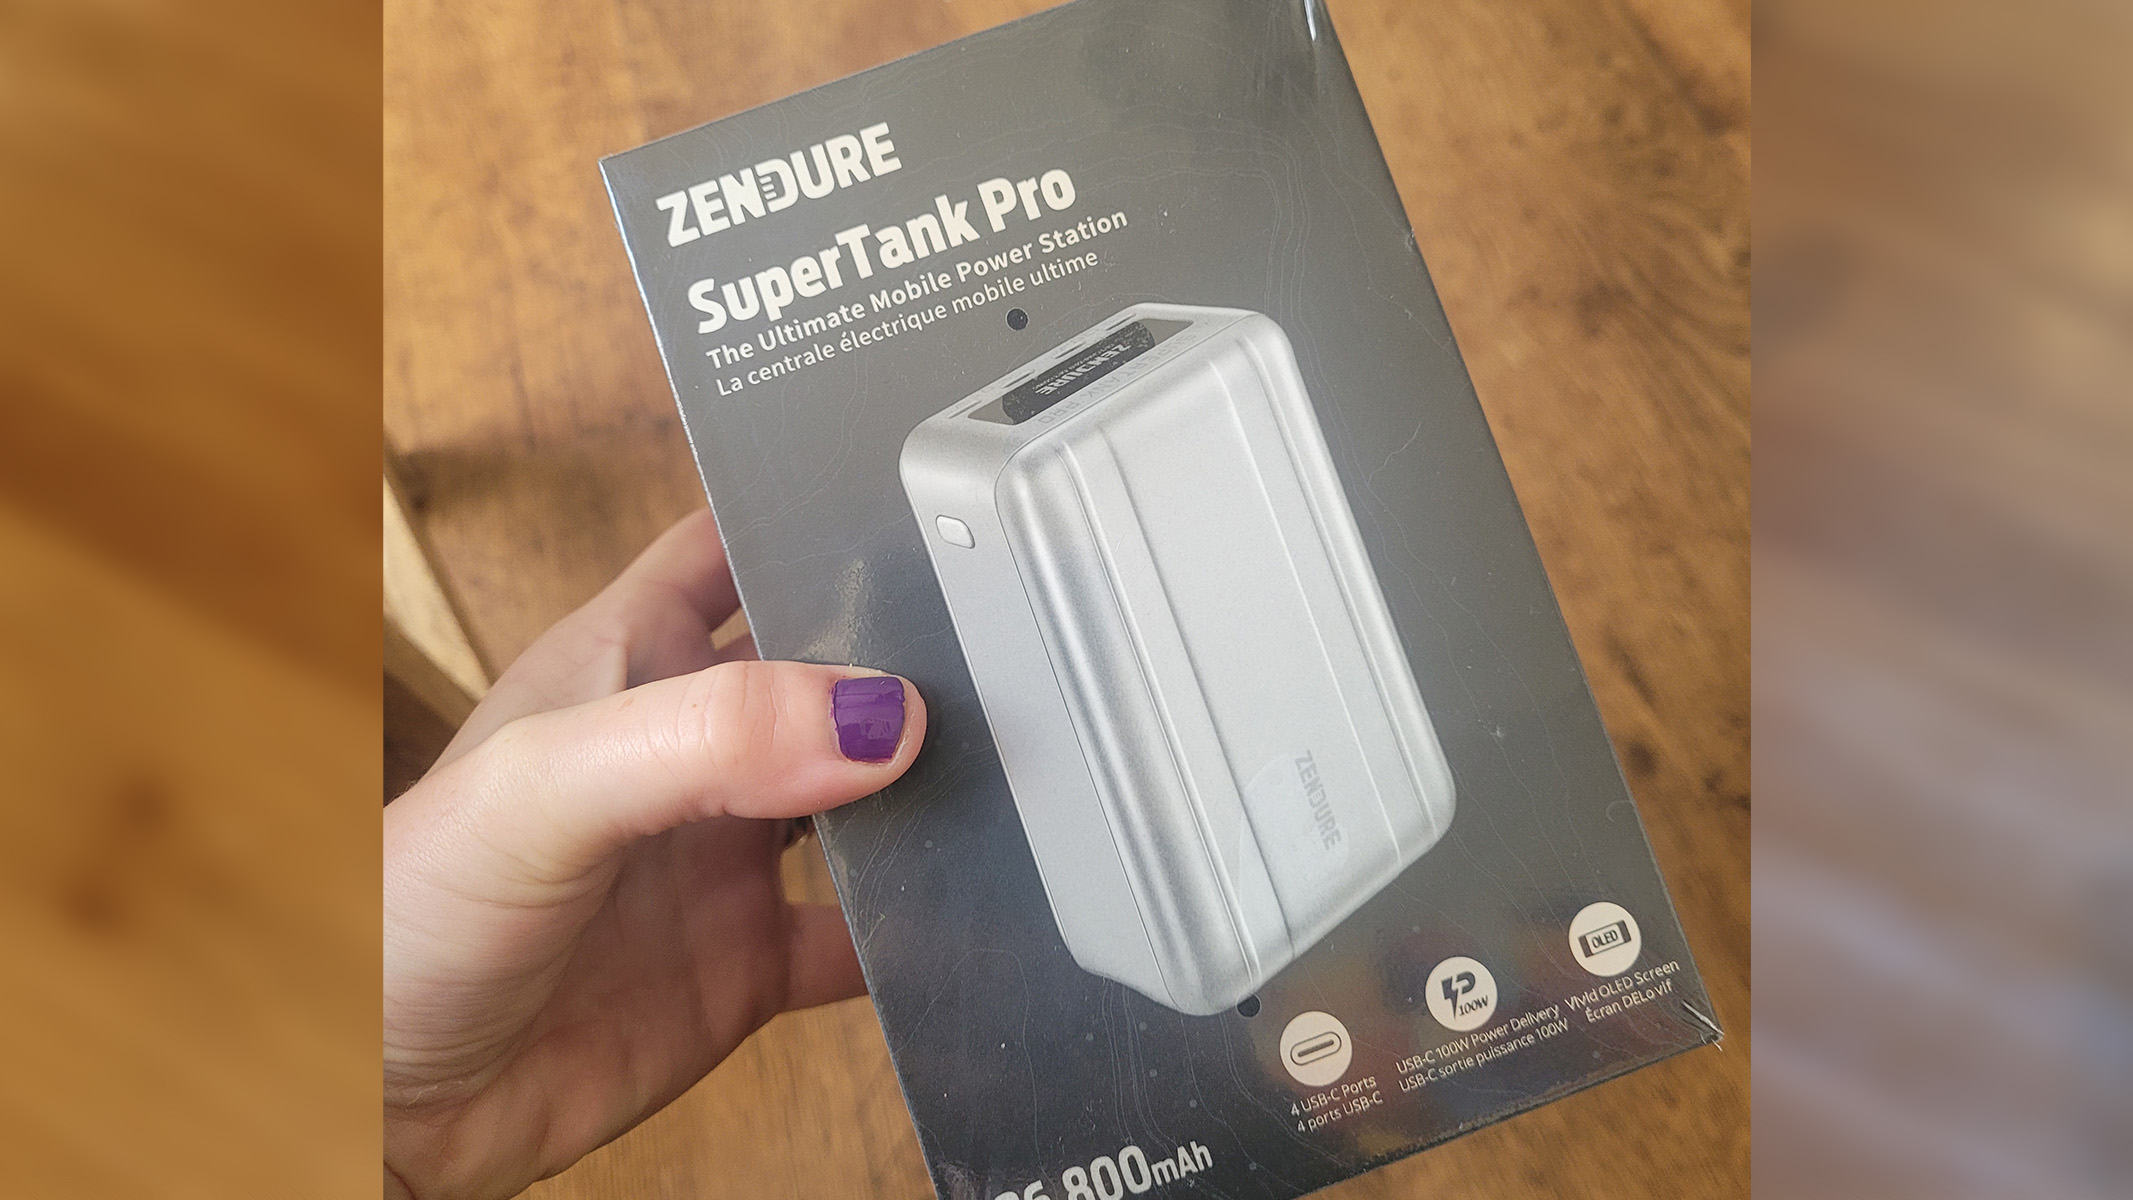 The Zendure SuperTank Pro 100W in its packaging